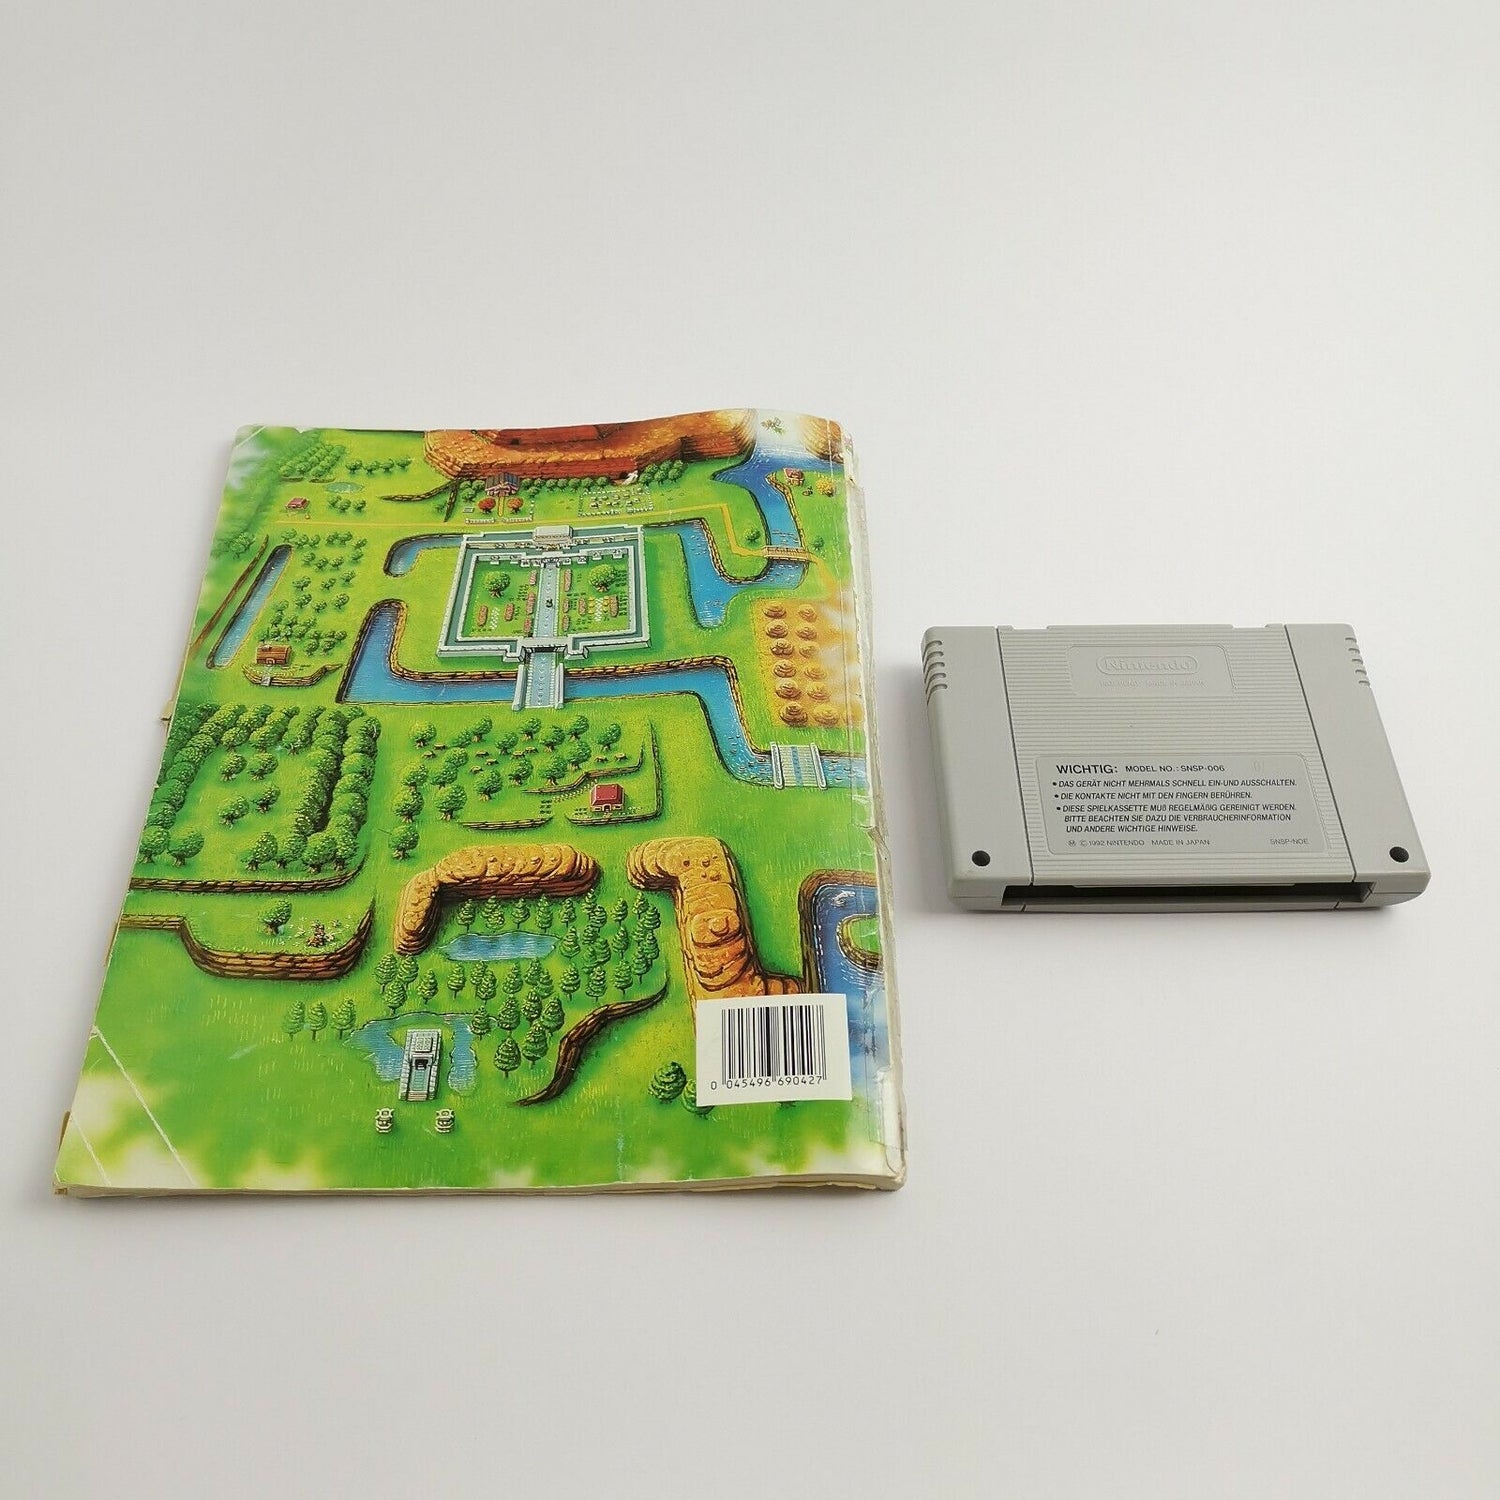 Super Nintendo Spiel The Legend of Zelda a link to the Past + Spieleberater SNES